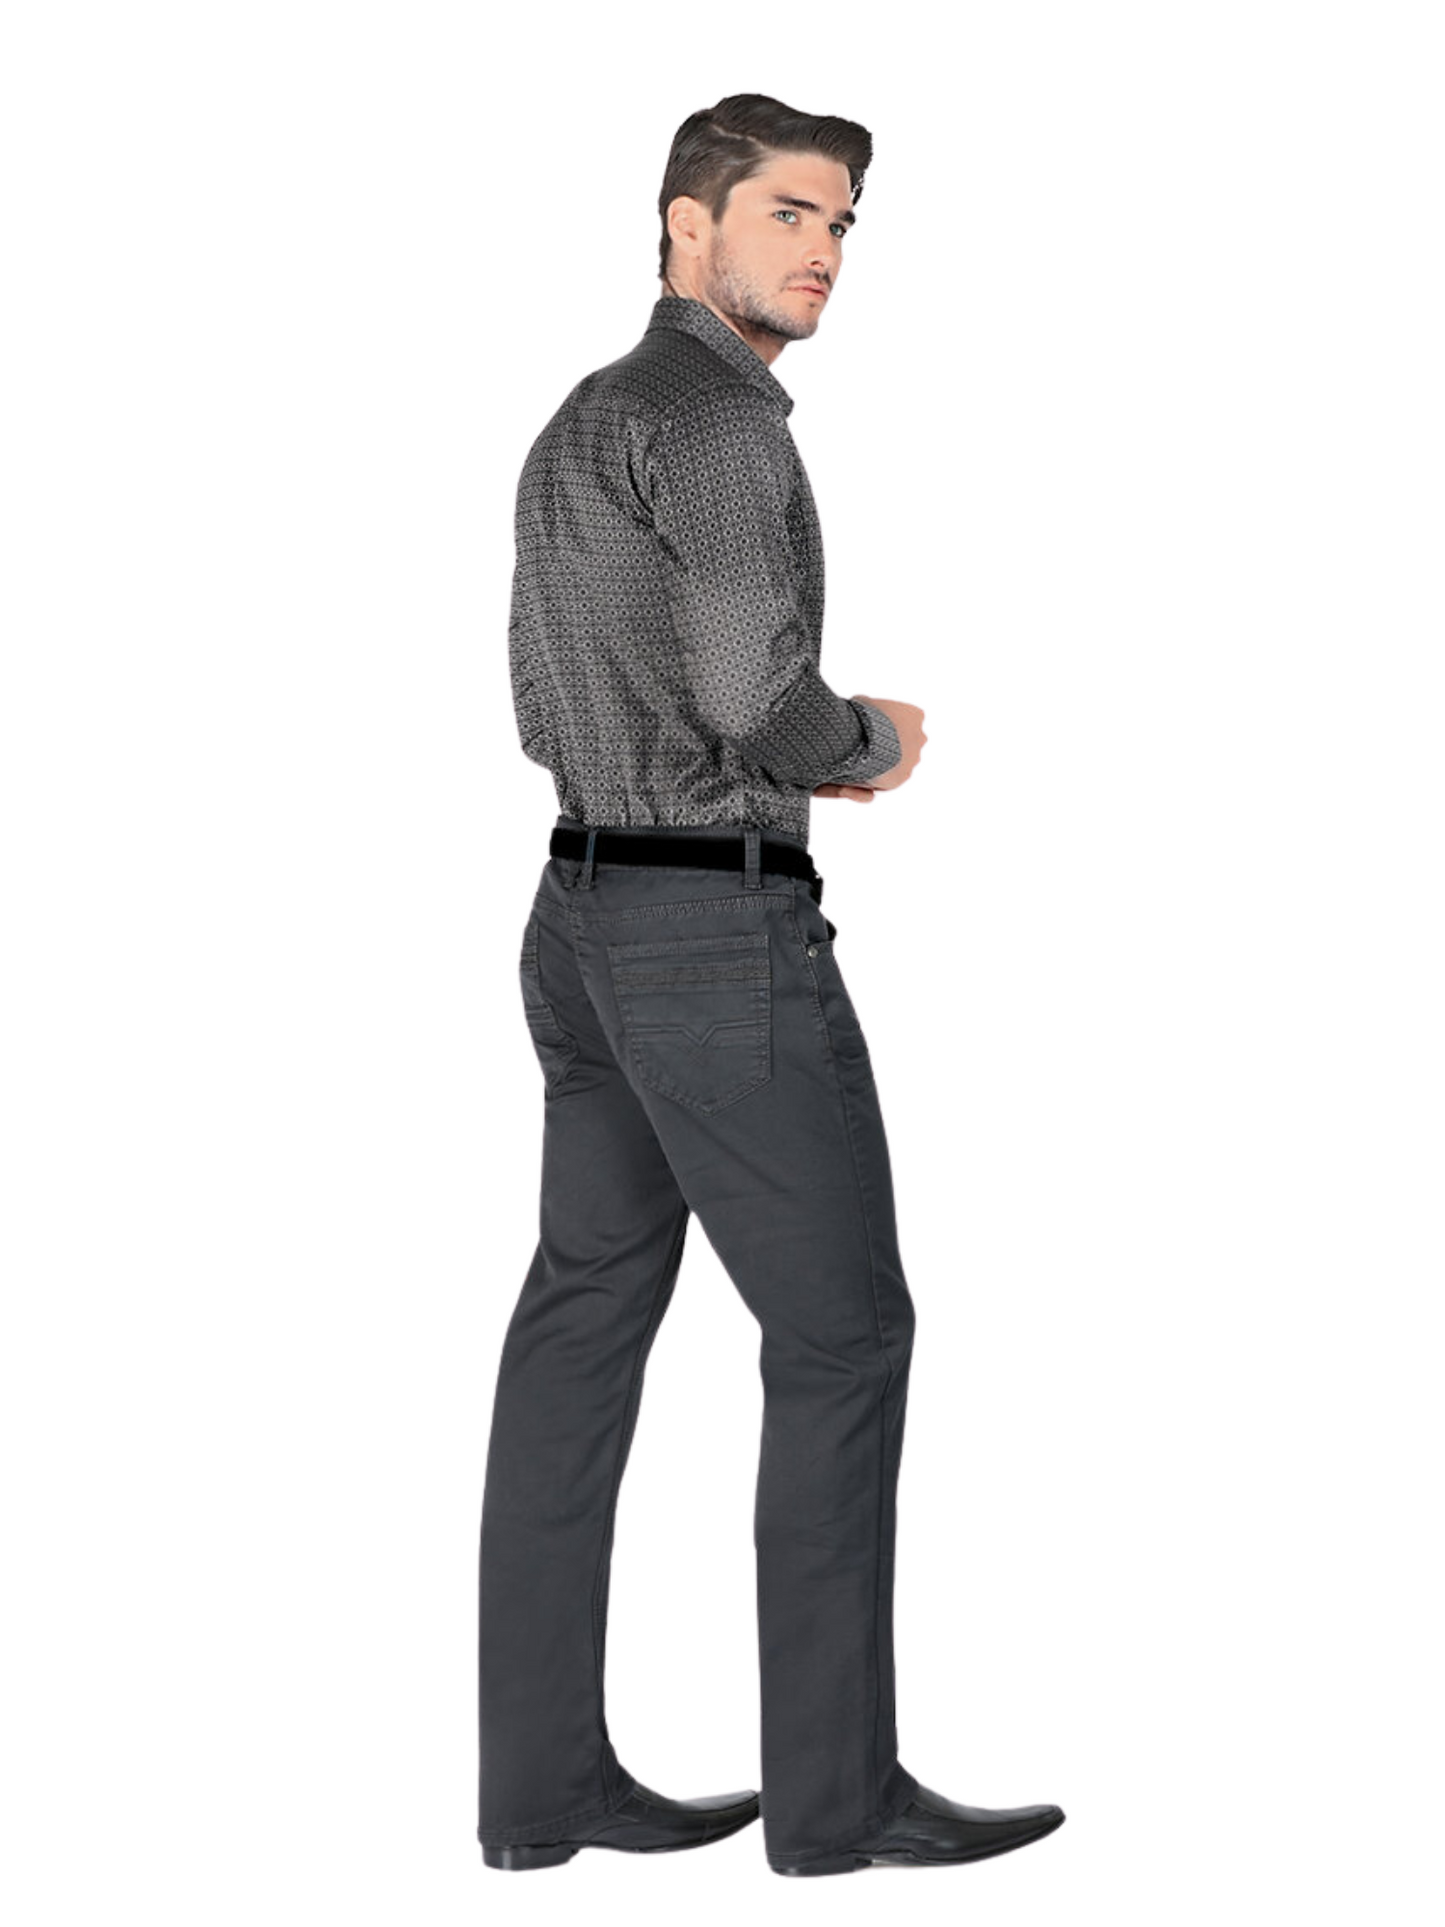 Pantalon Vaquero de Mezclilla Stretch para Hombre 'Montero' - ID: 5601 Denim Jeans Montero 